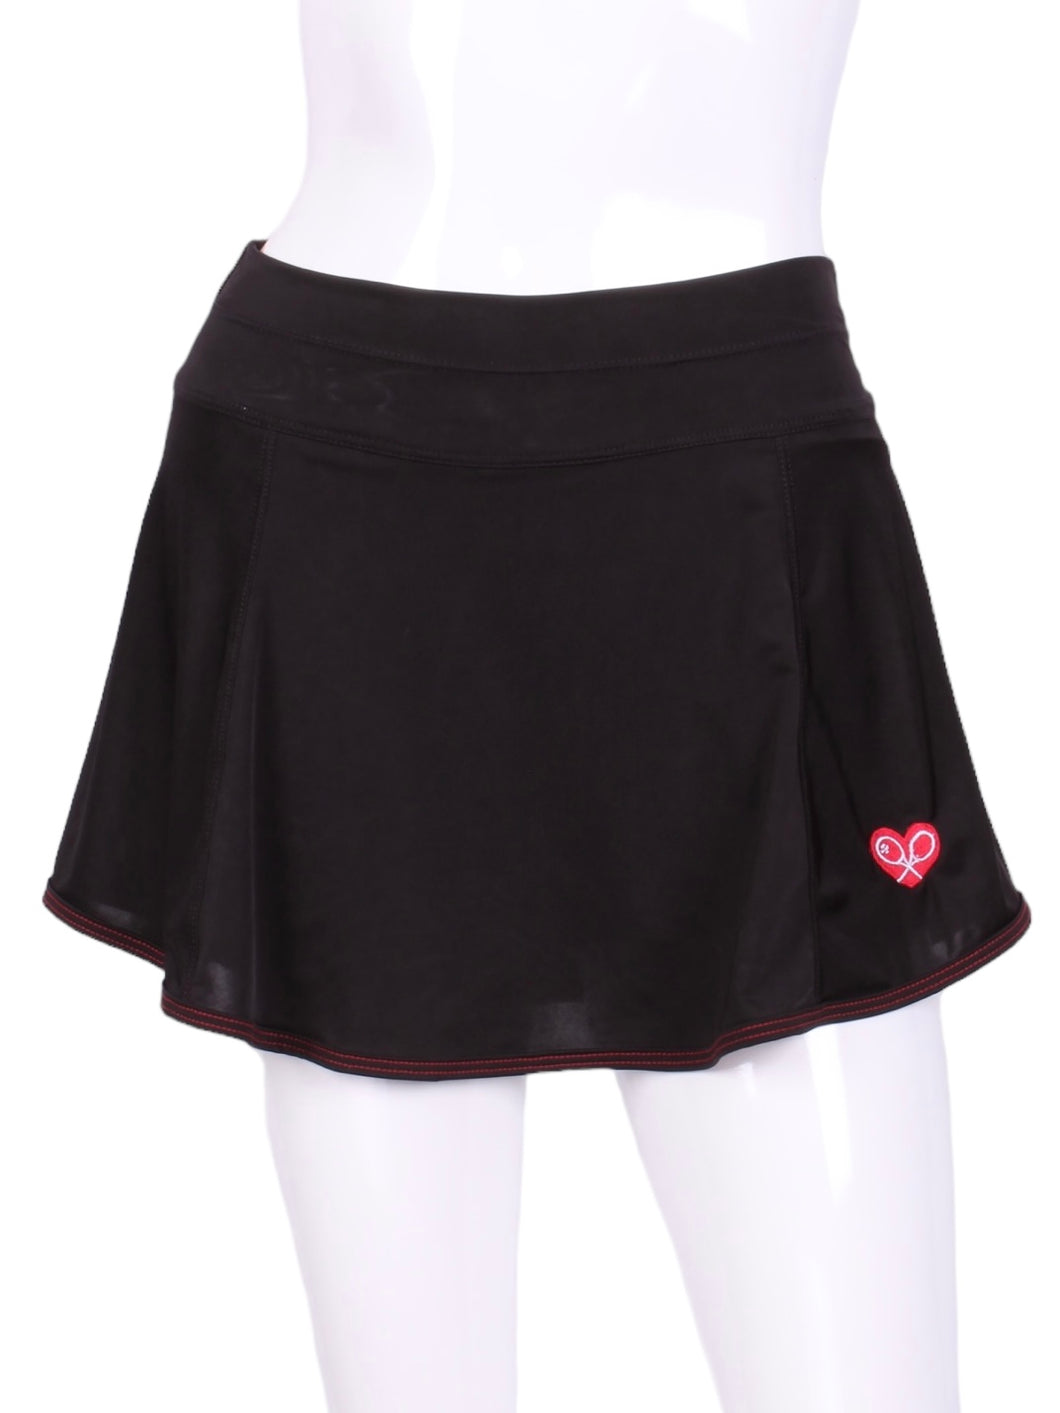 Gladiator Skirt Black With Red Stitching